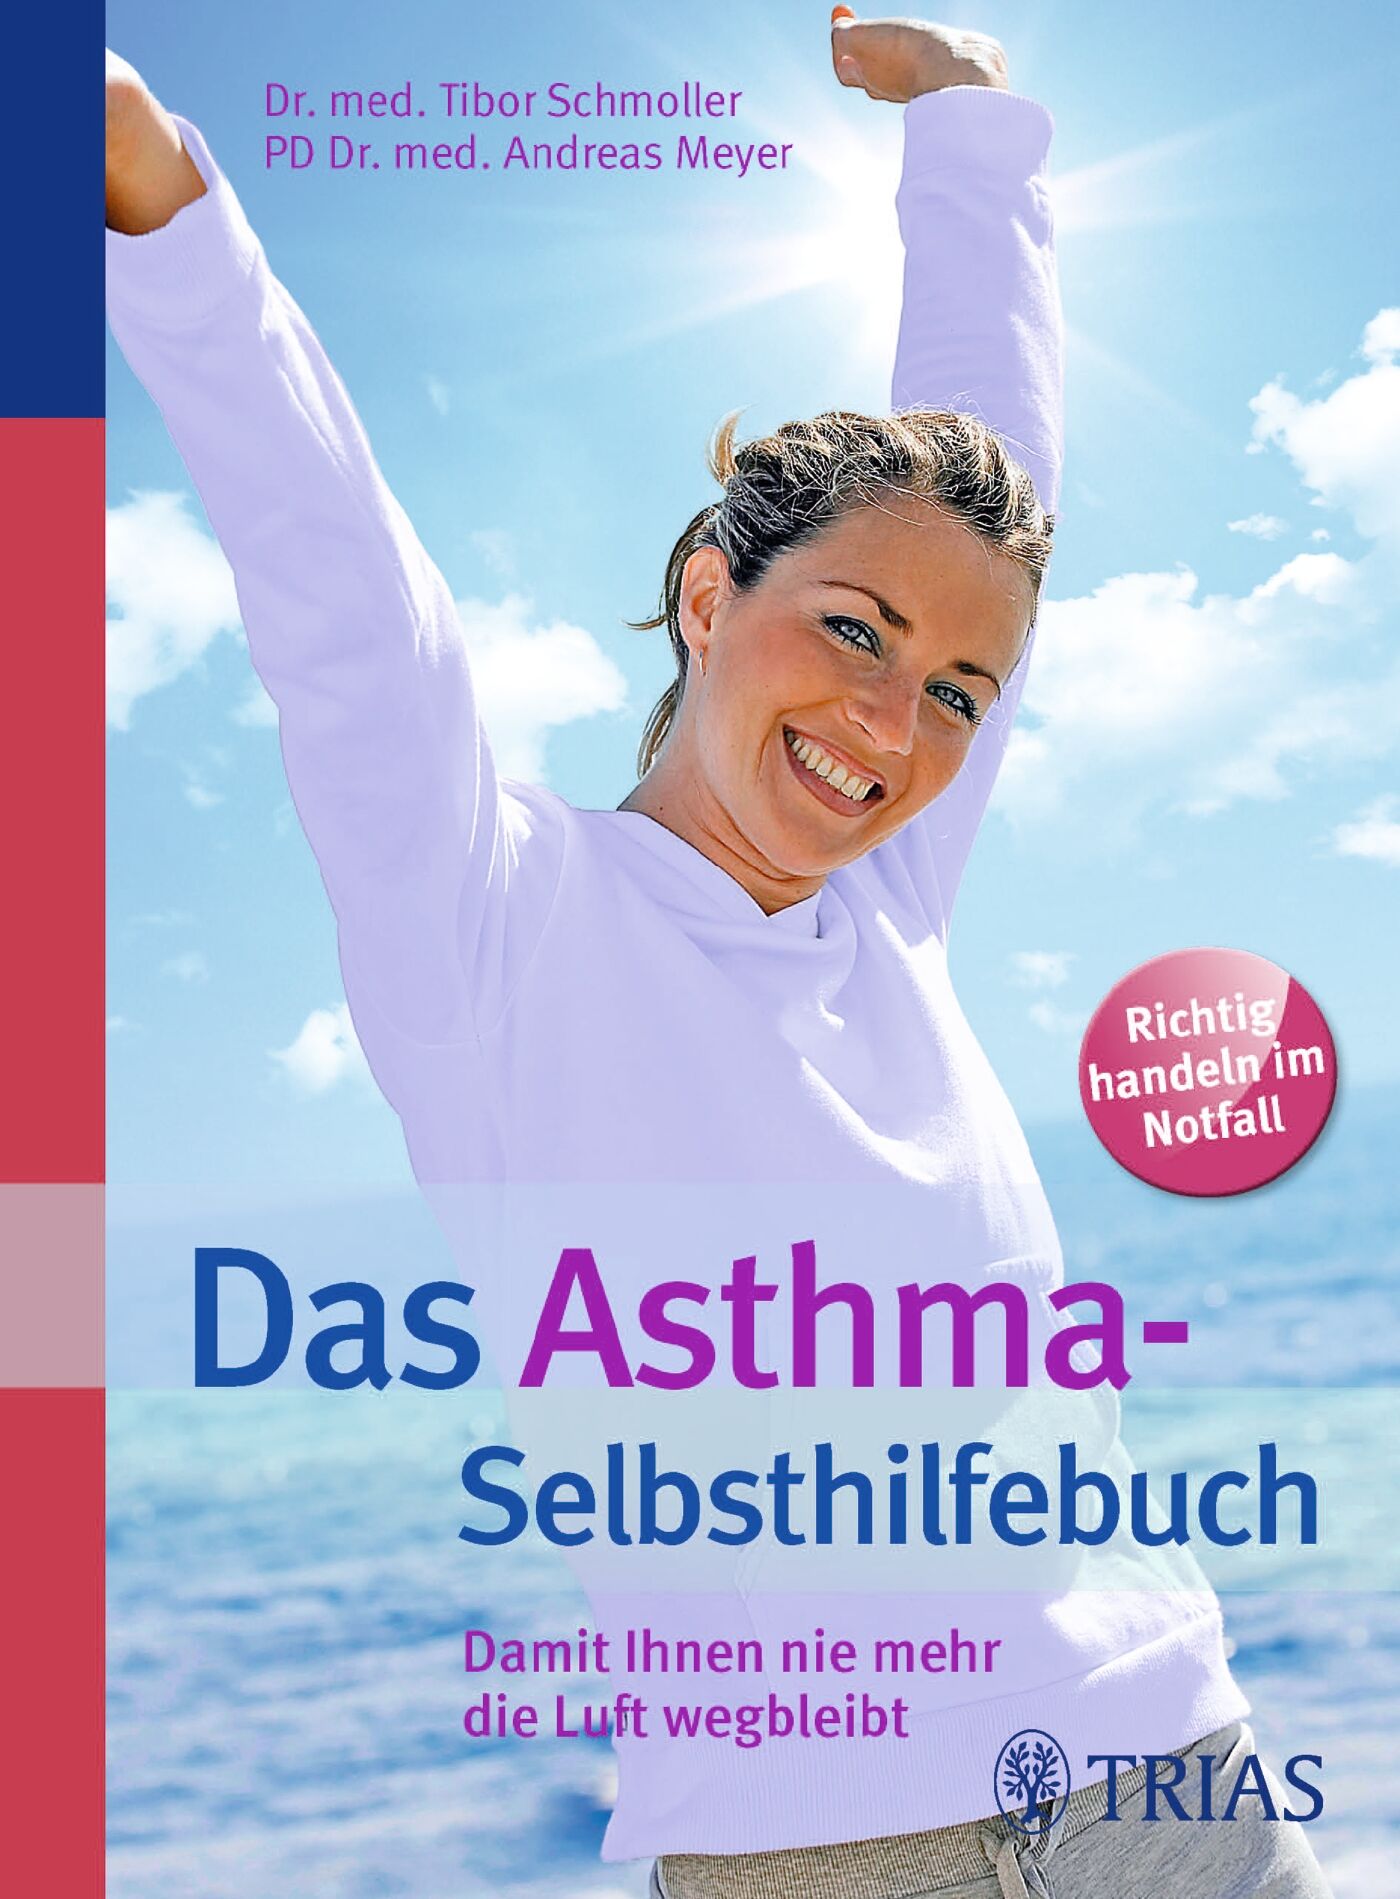 Das Asthma-Selbsthilfebuch, 9783830466482